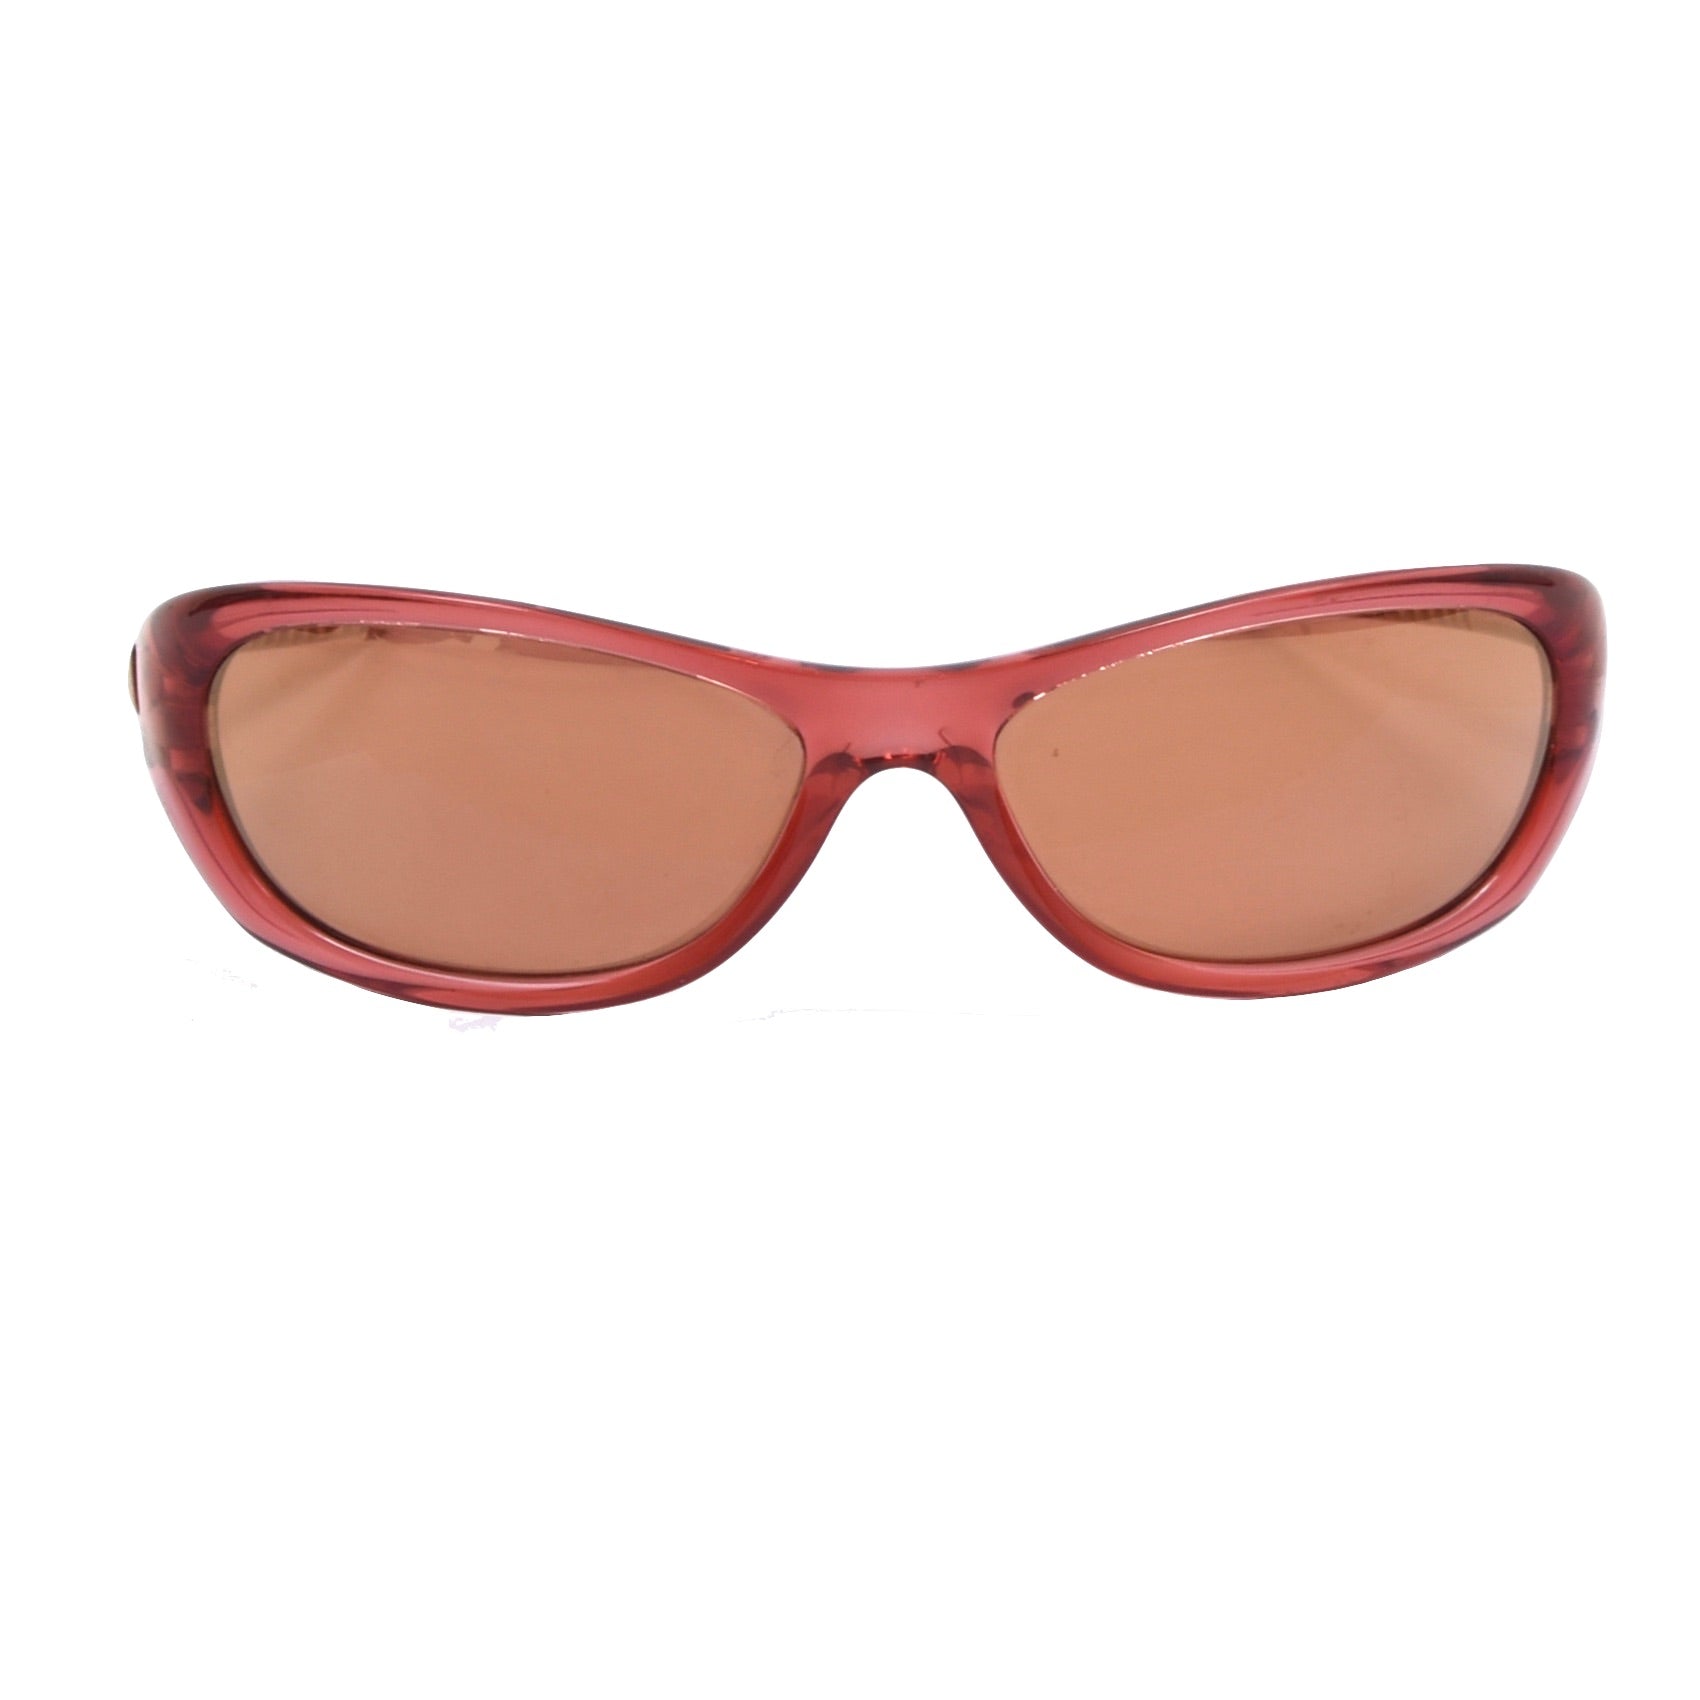 Adidas A353 Merlin Sunglasses Pink/Red Transparent – Leot James